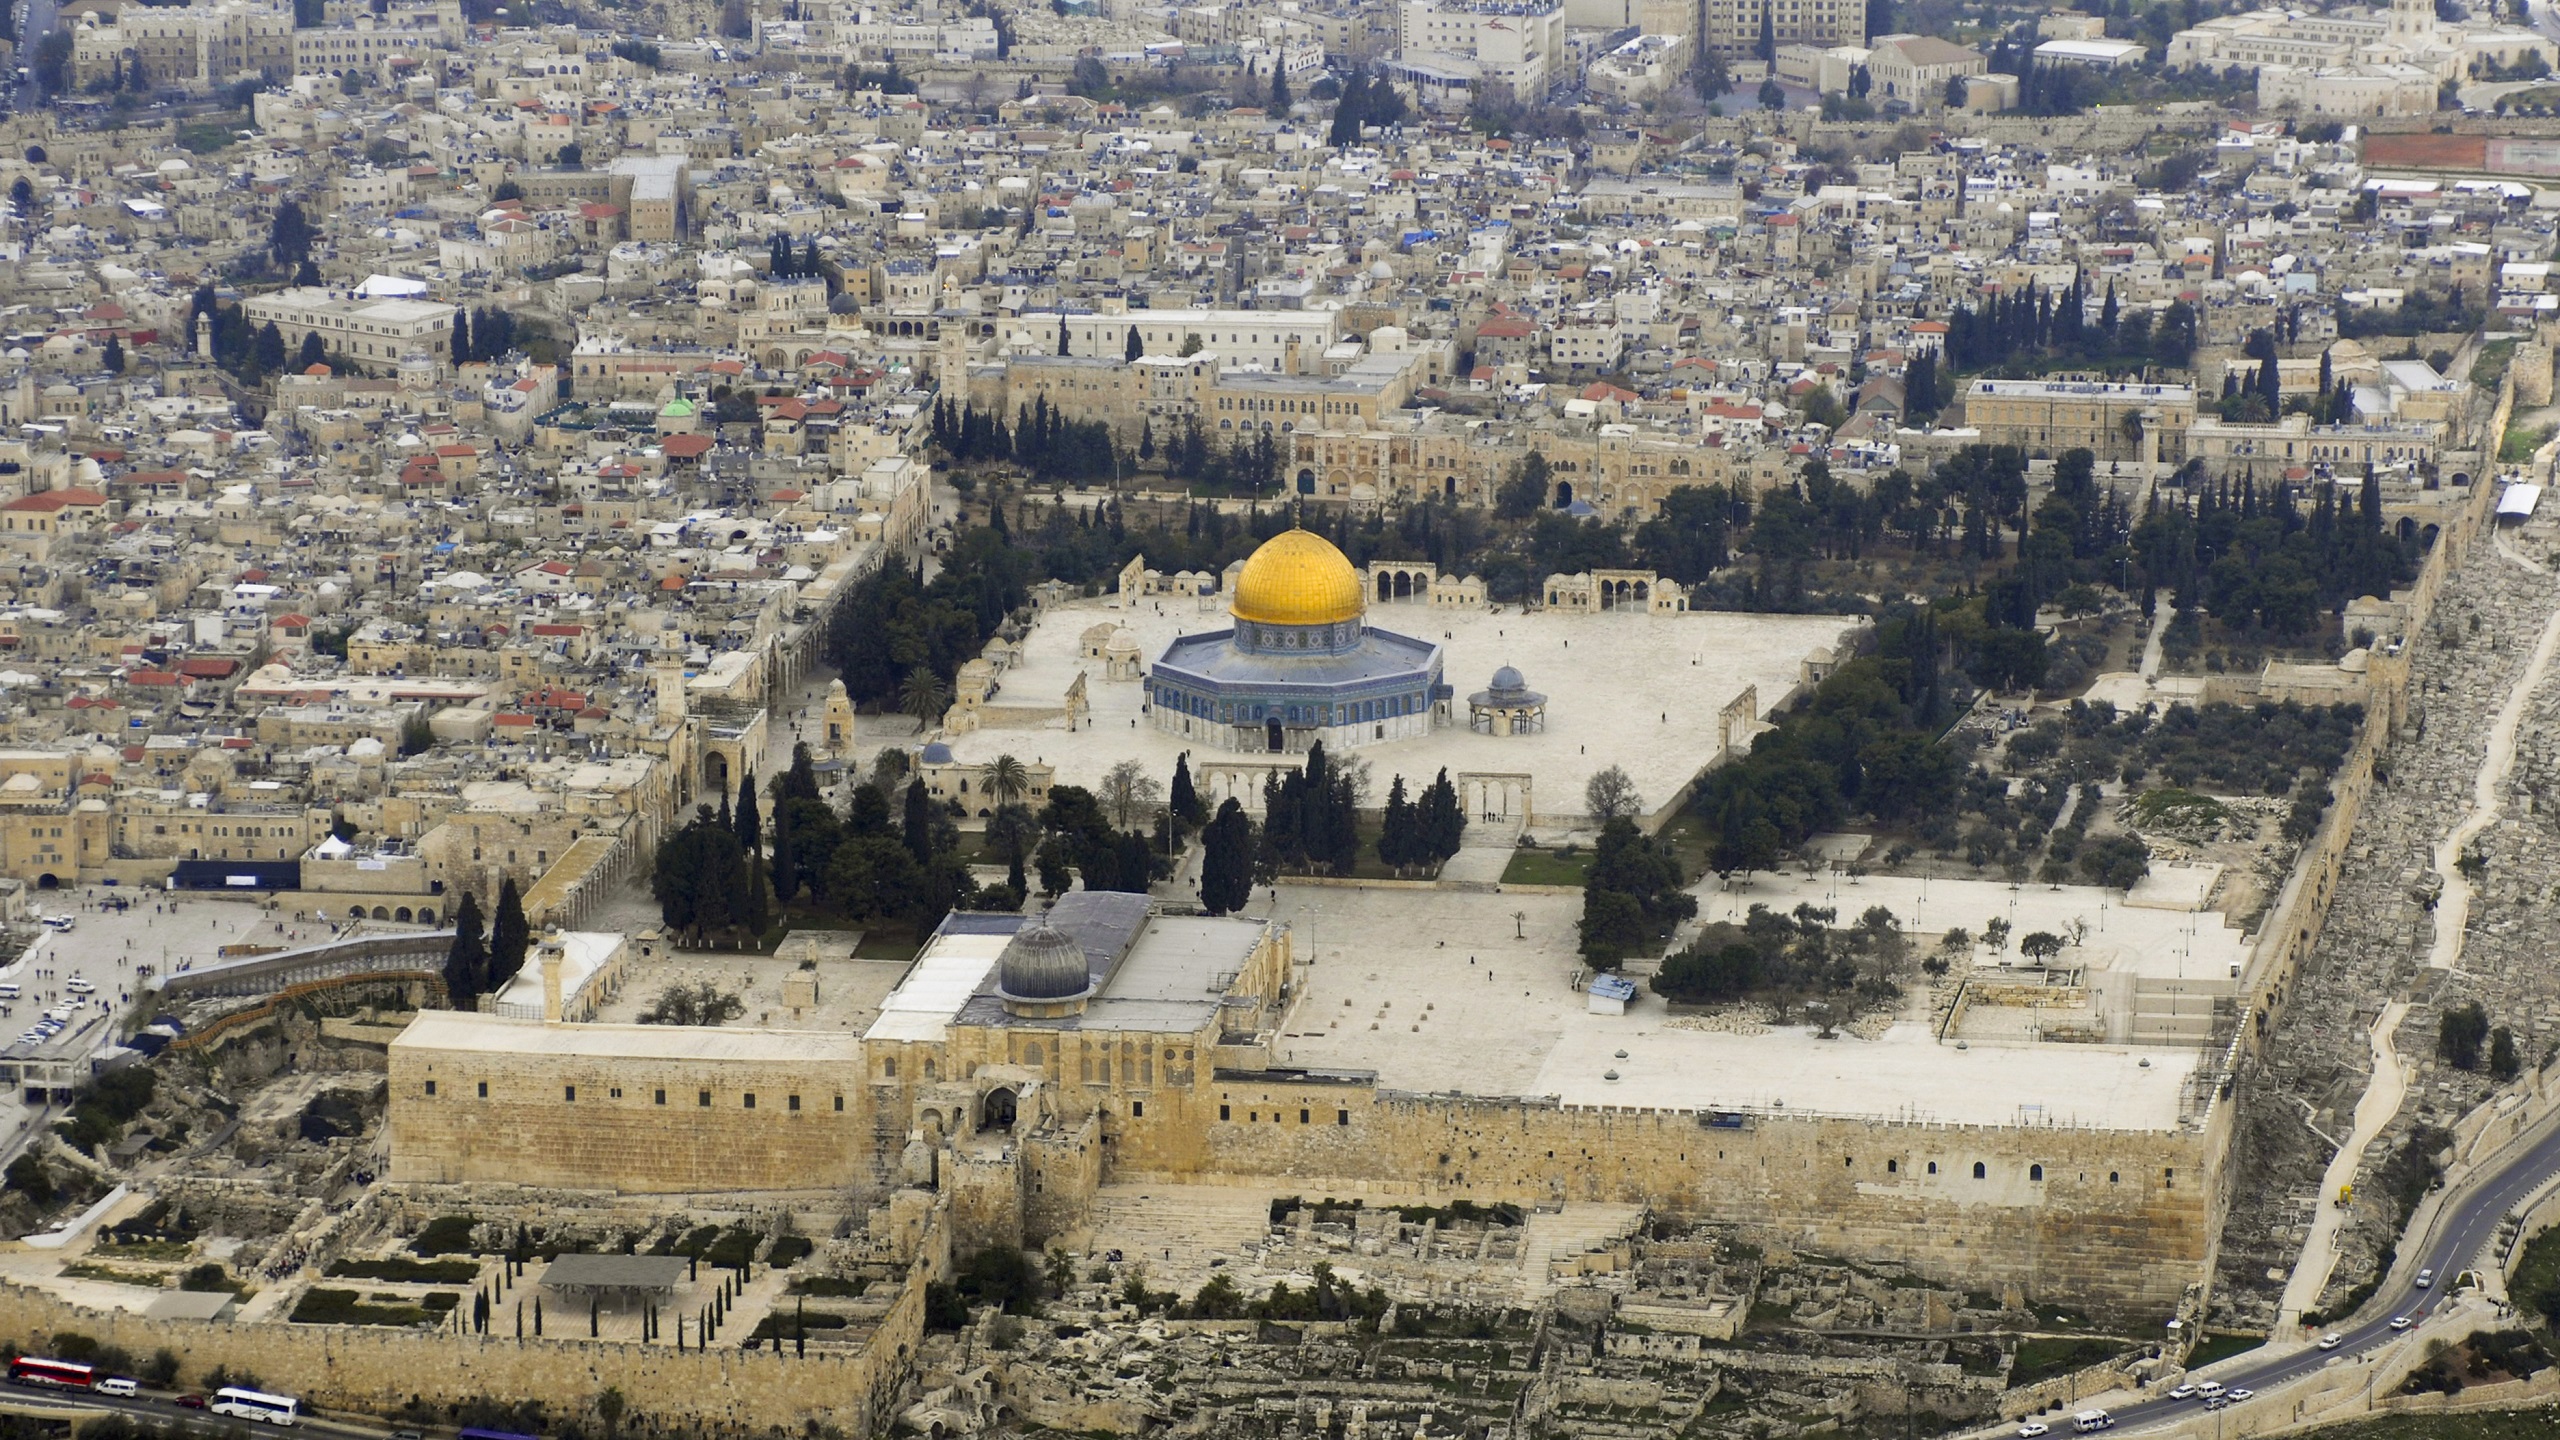 Plan To Divide Temple Mount/Al-Aqsa Compound Sparks Widespread Condemnation